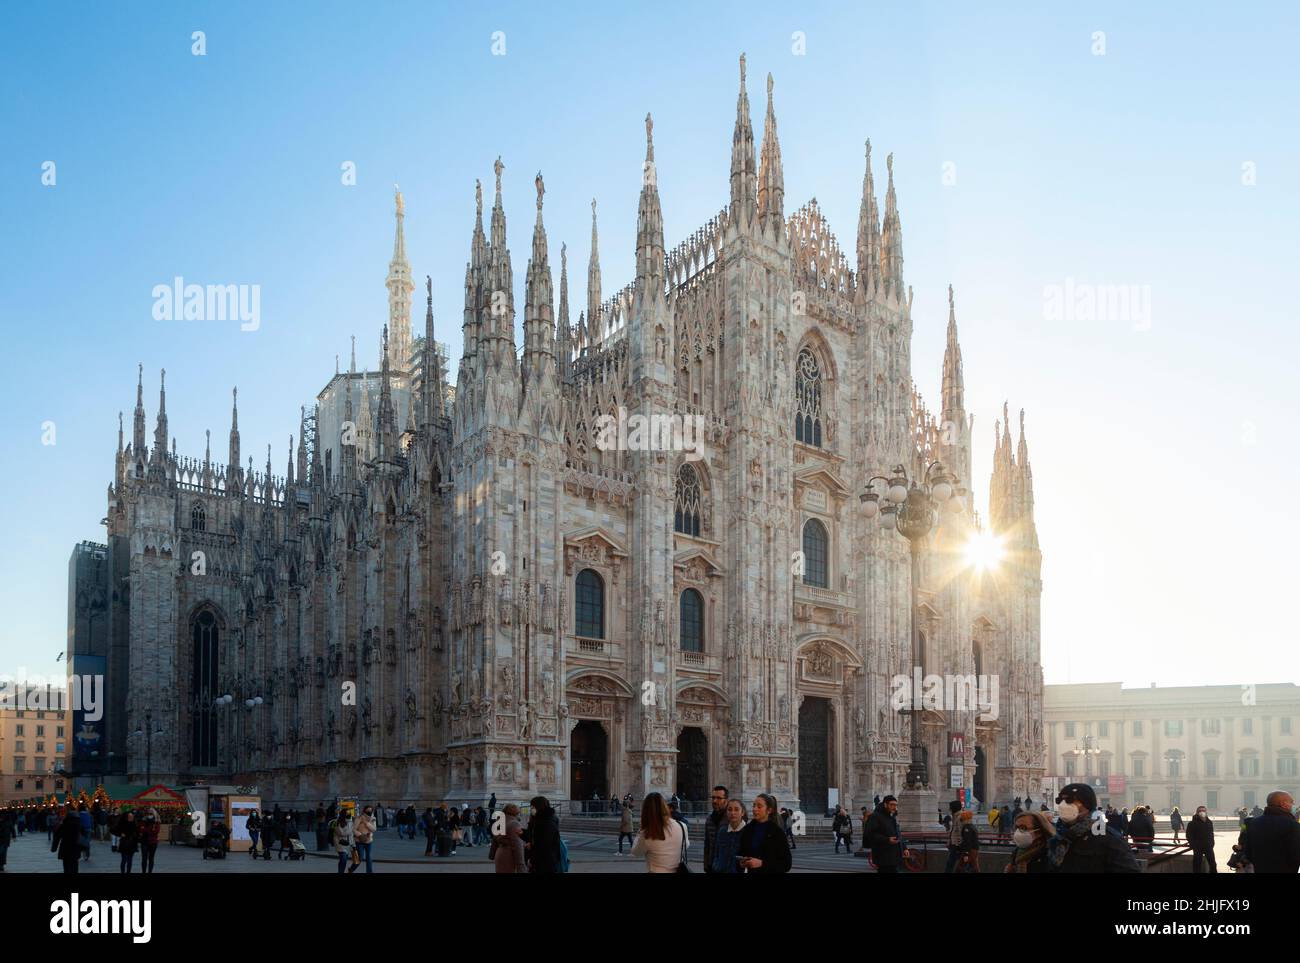 Duomo di Milano, the splendid cathedral of Milan city, Italy, also ...